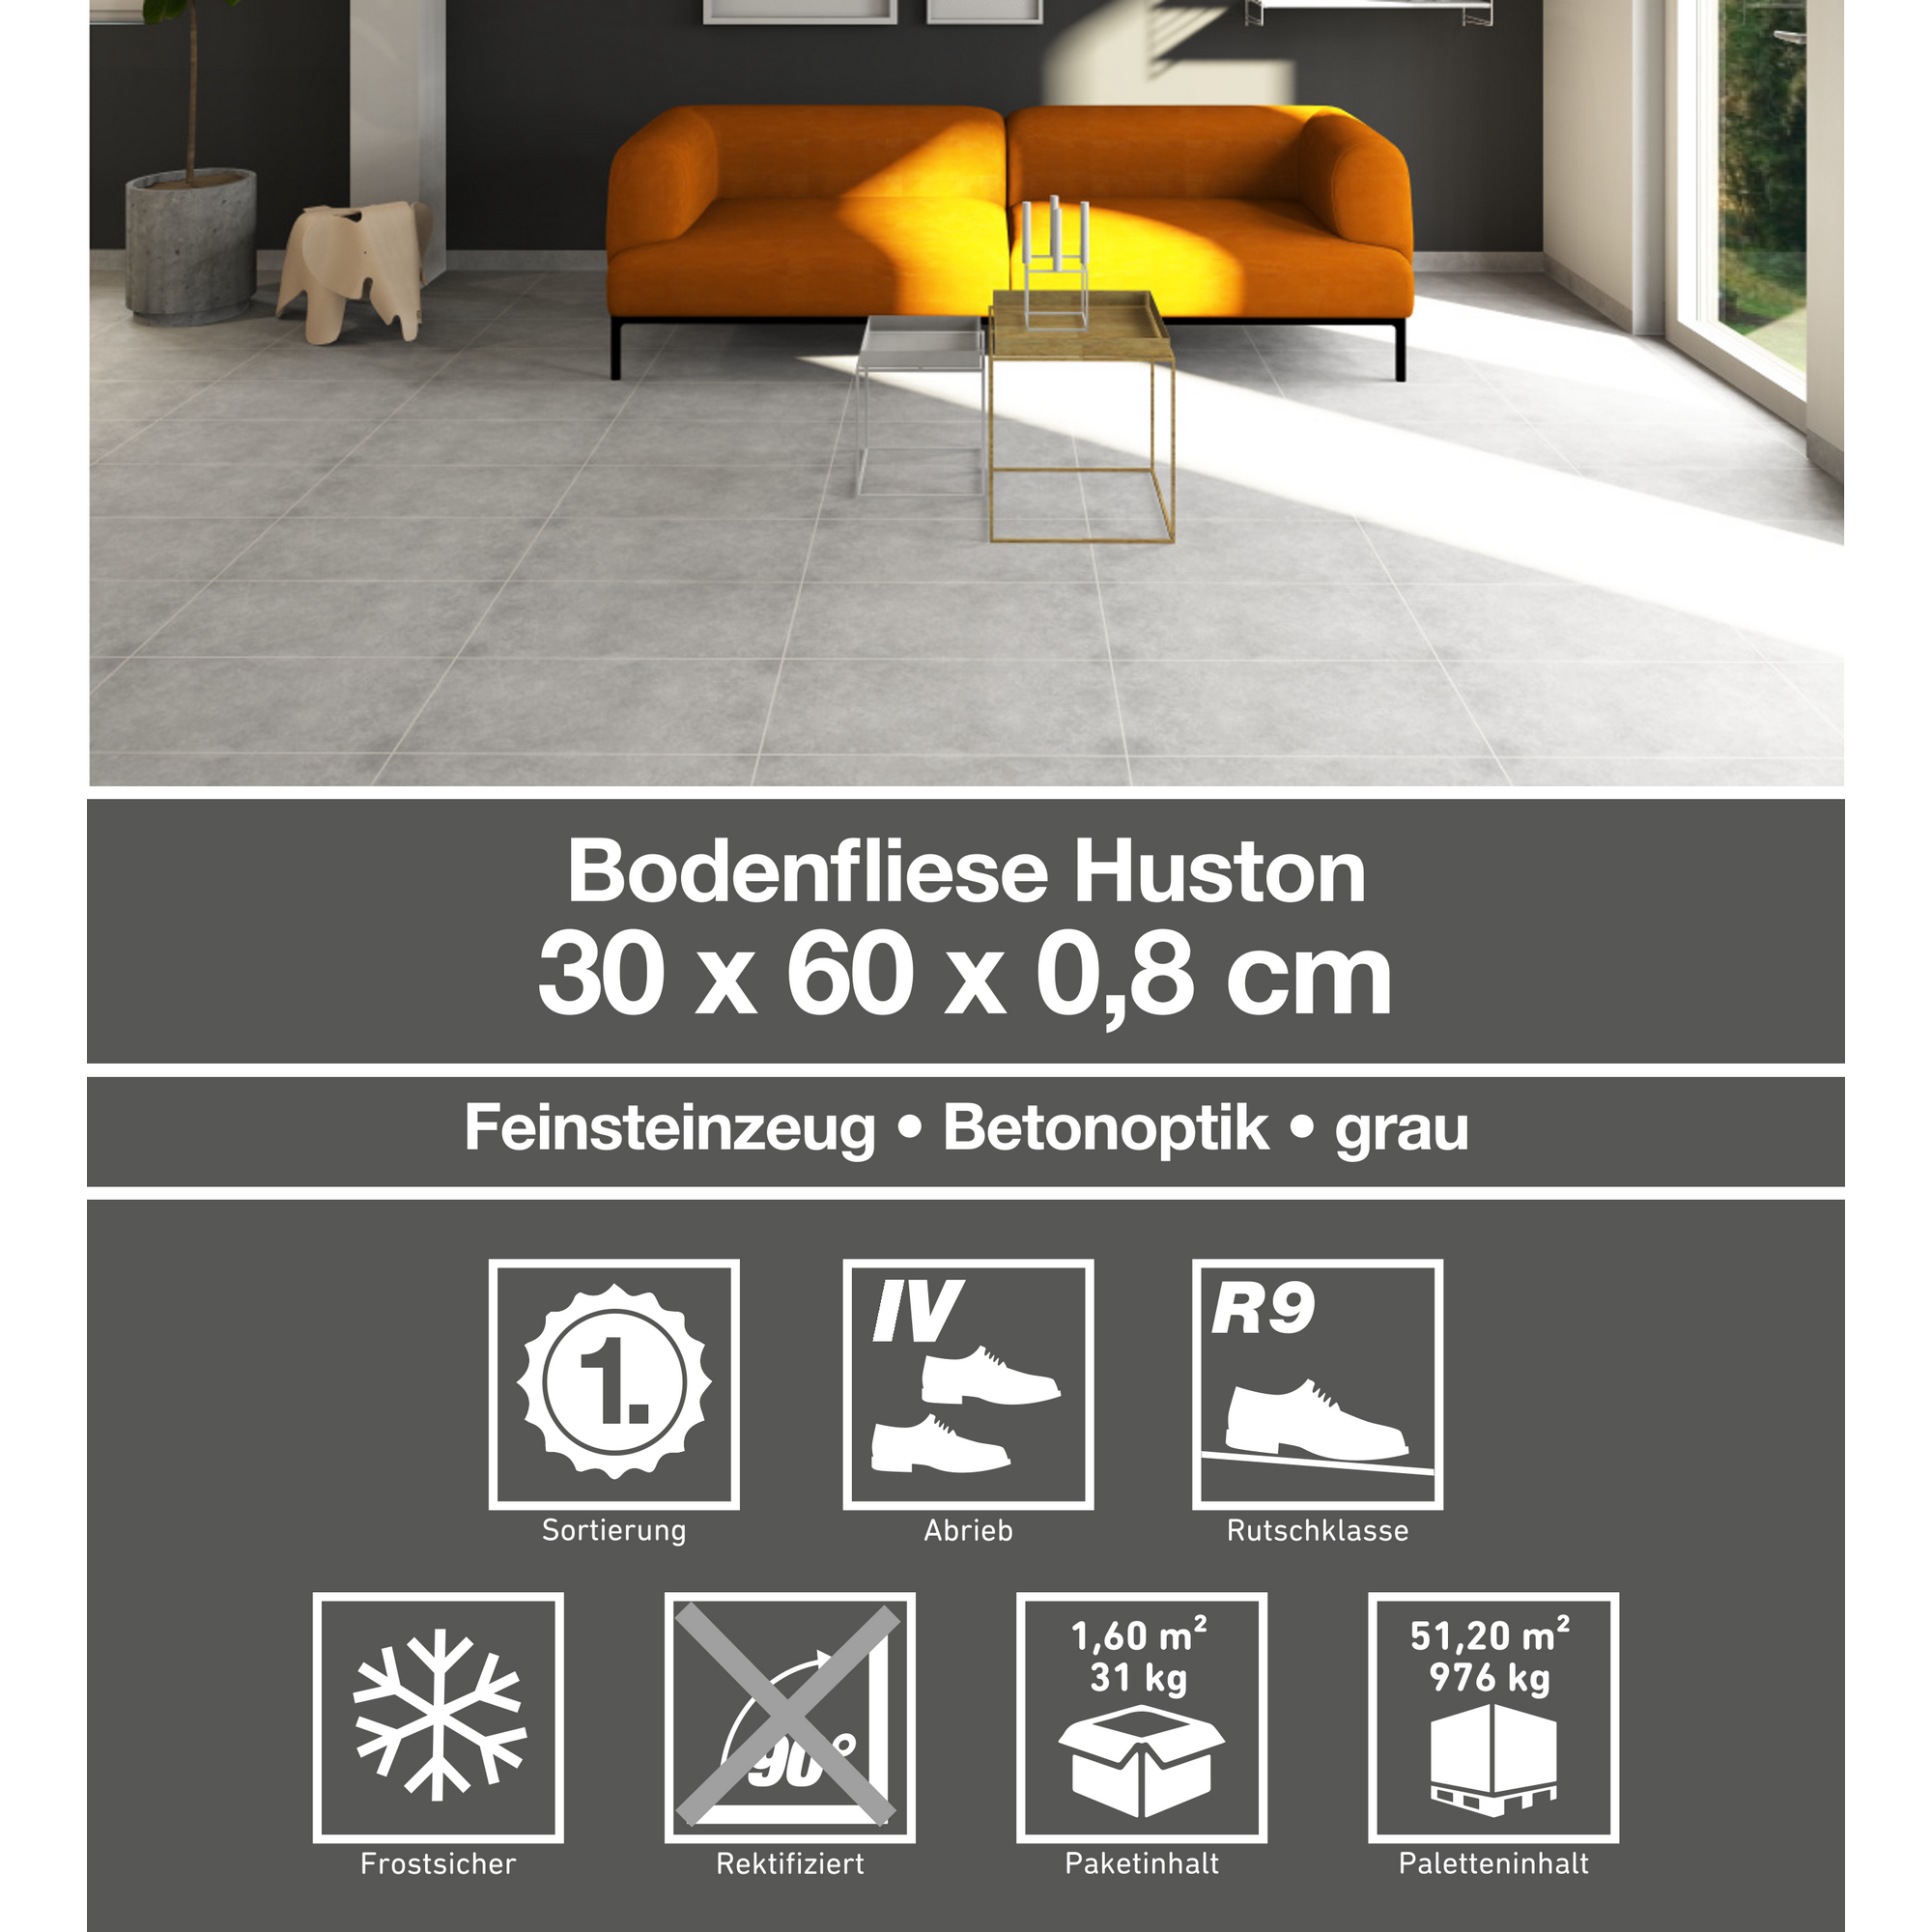 Bodenfliese 'Huston' Feinsteinzeug grau 30 x 60 cm + product picture